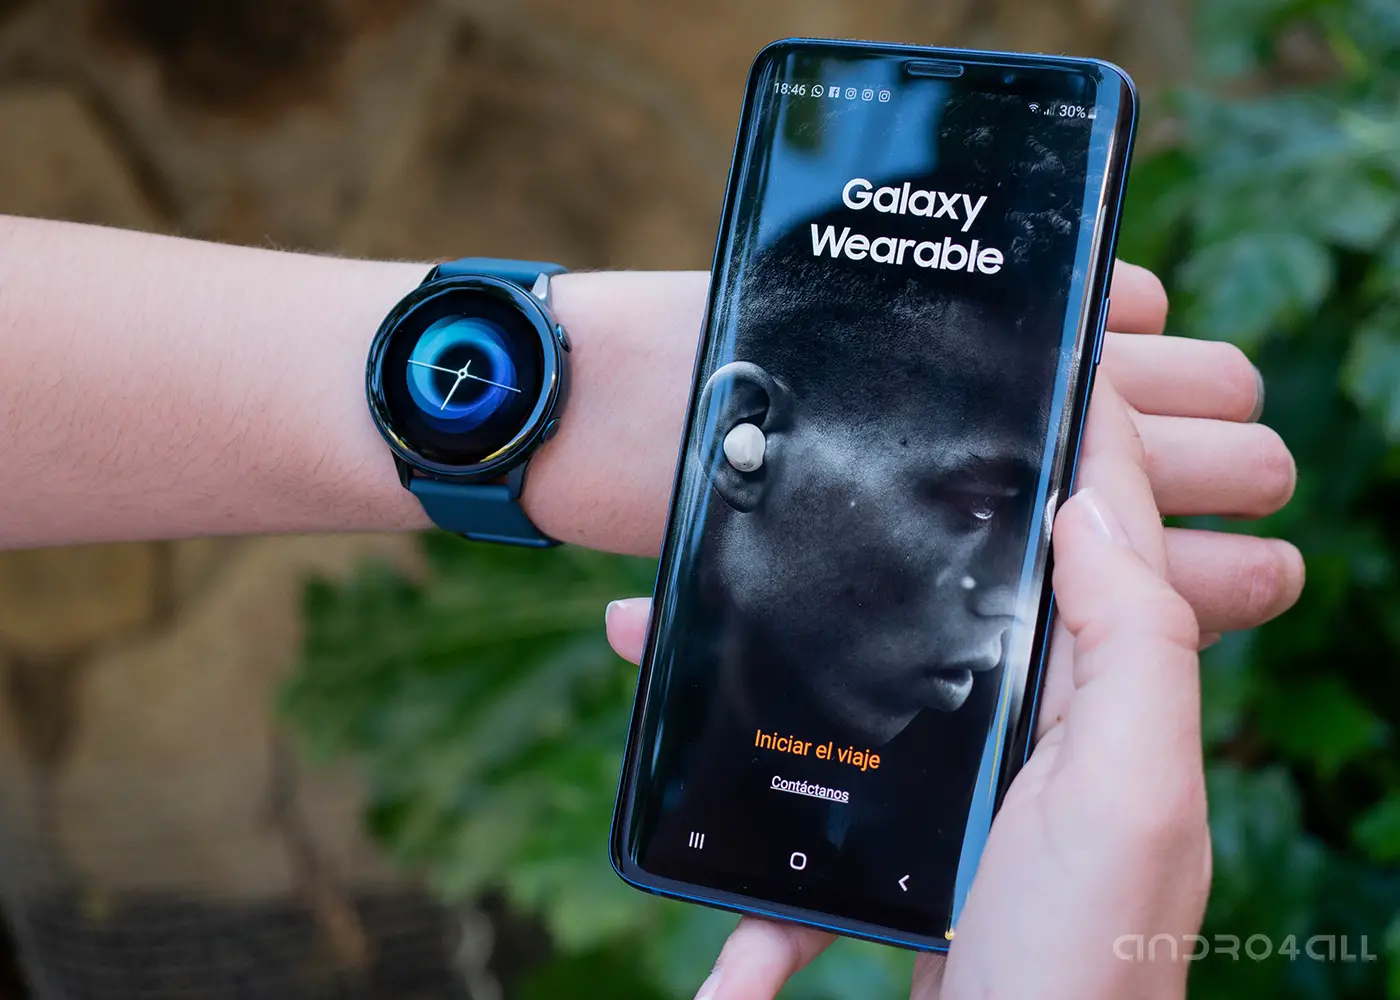 Samsung Galaxy Wearable. Samsung Galaxy Wearable 4. Samsung Wearable приложение. Приложение галакси Веарабле что это. Galaxy wearable на андроид